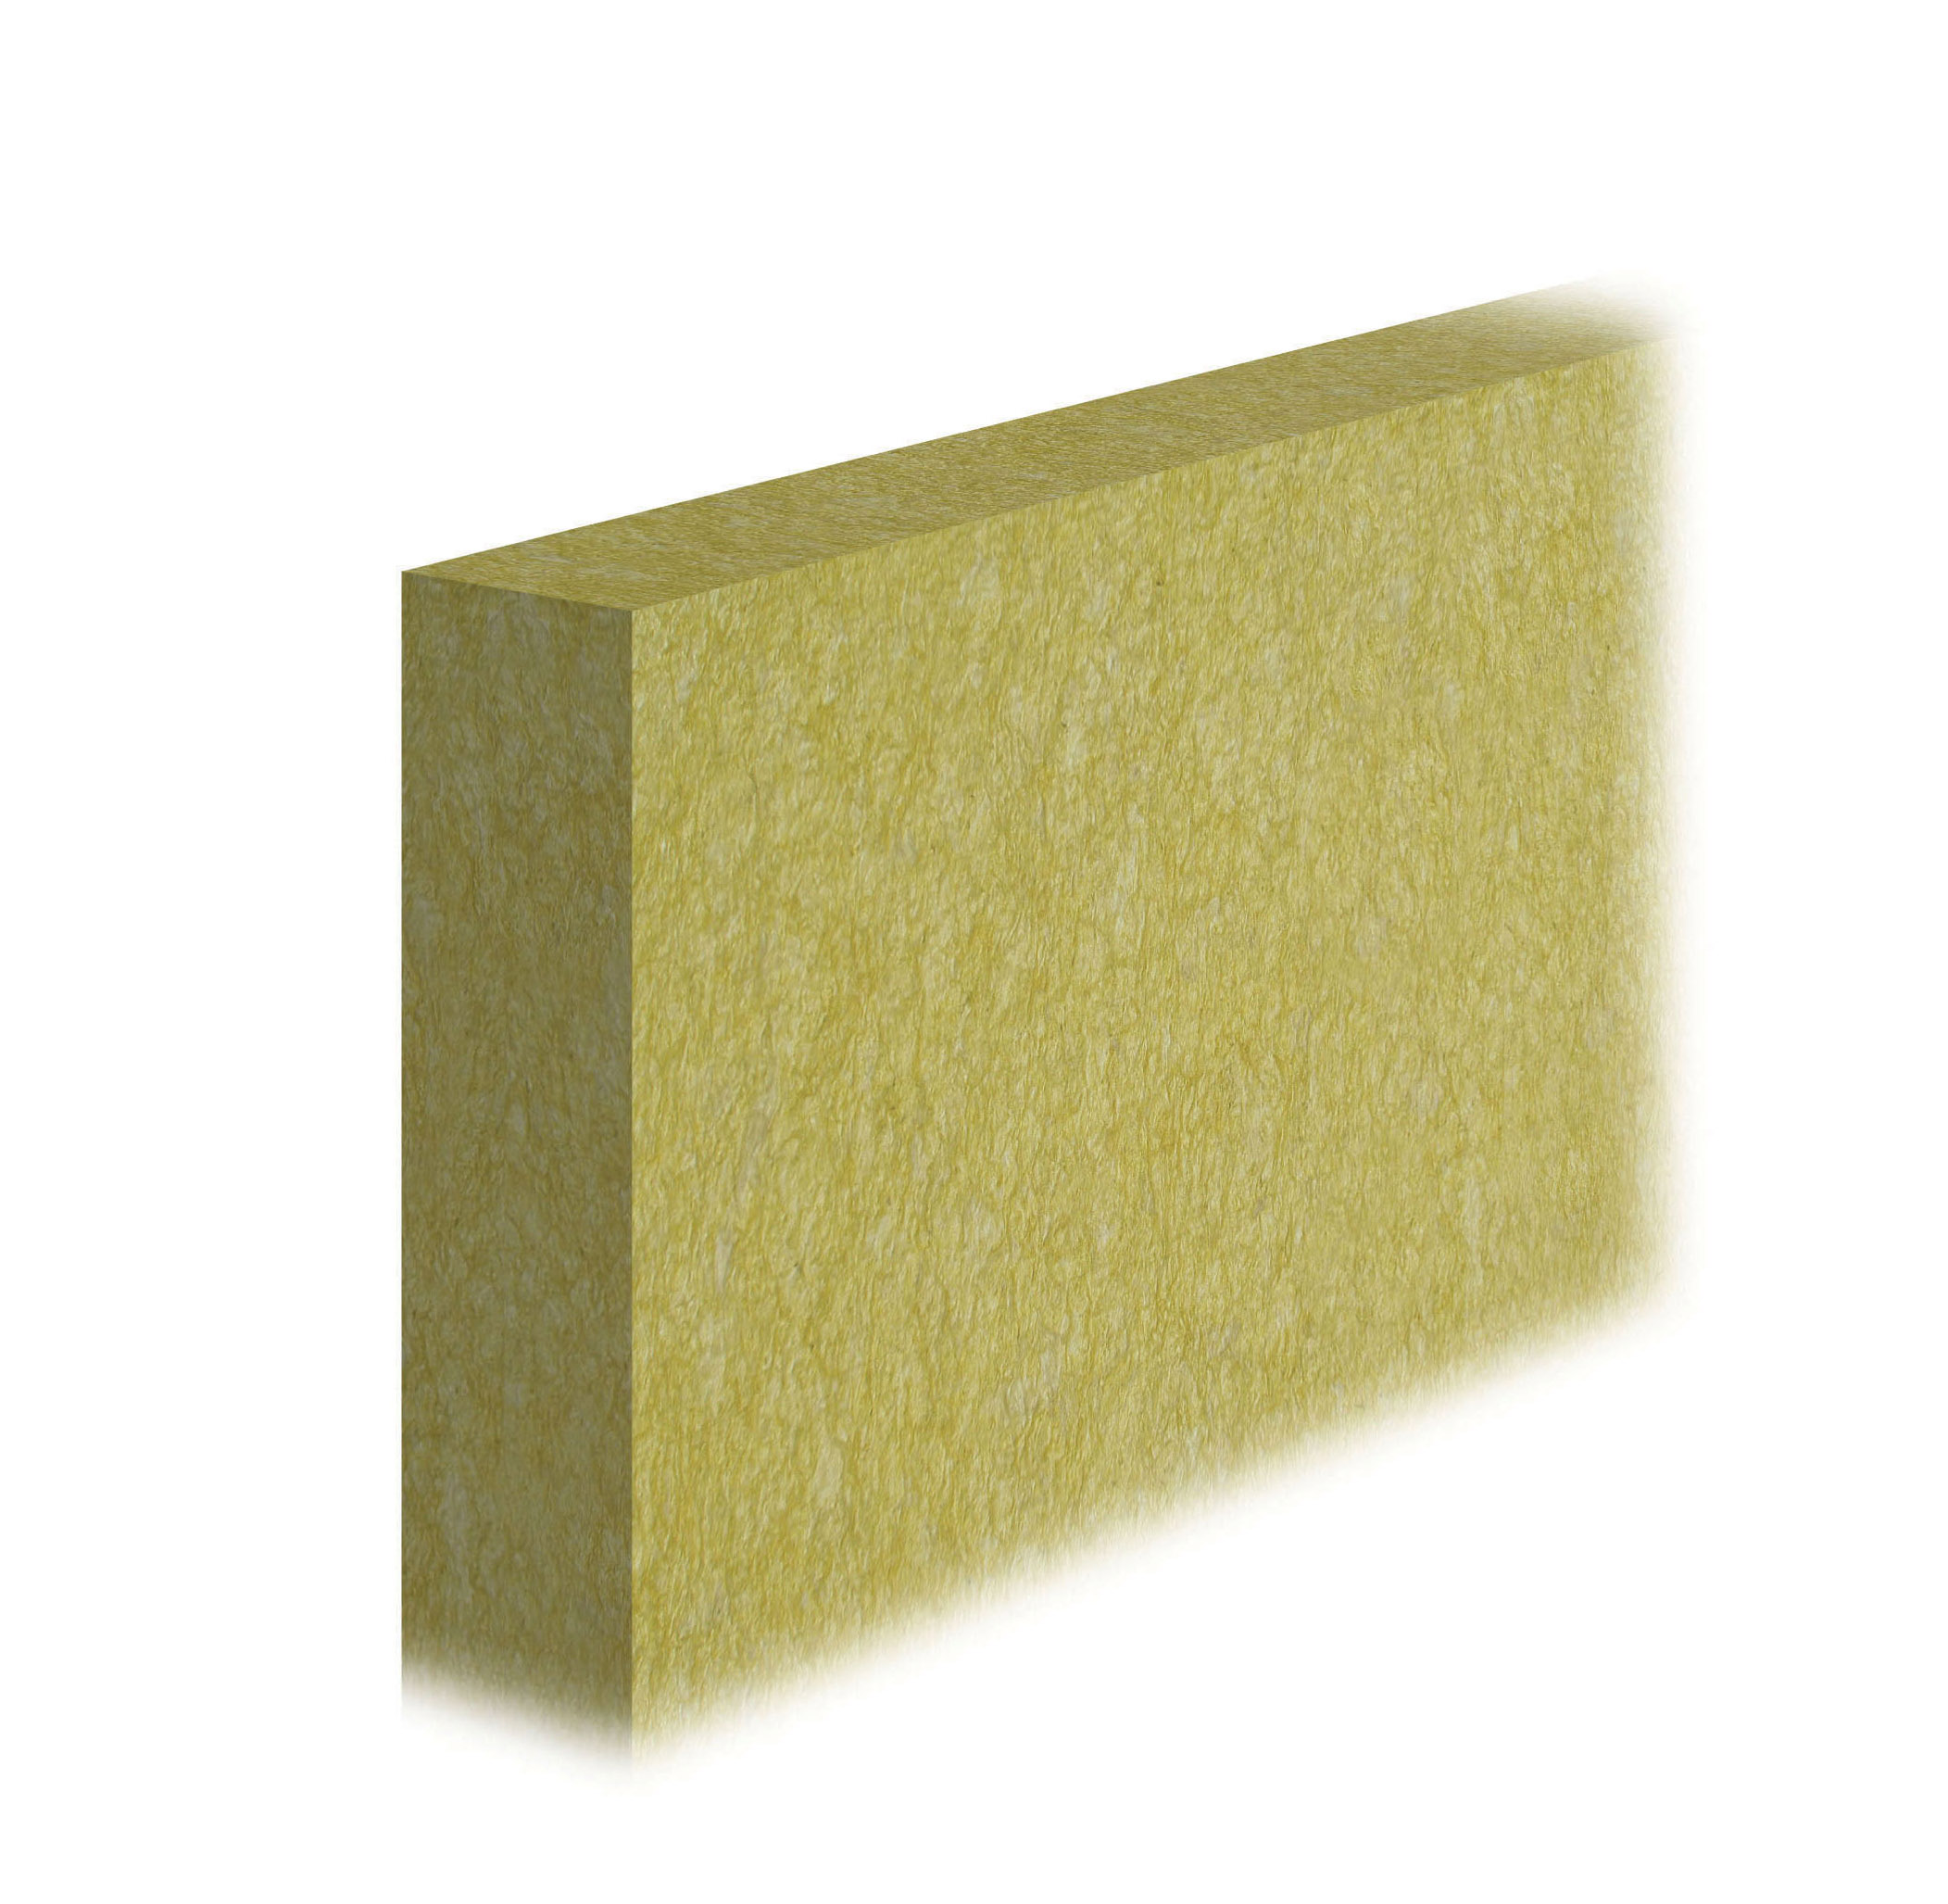 EWI DUAL DENSITY SLAB: Dual-density Rock Mineral Wool slab for External Wall Insulation systems